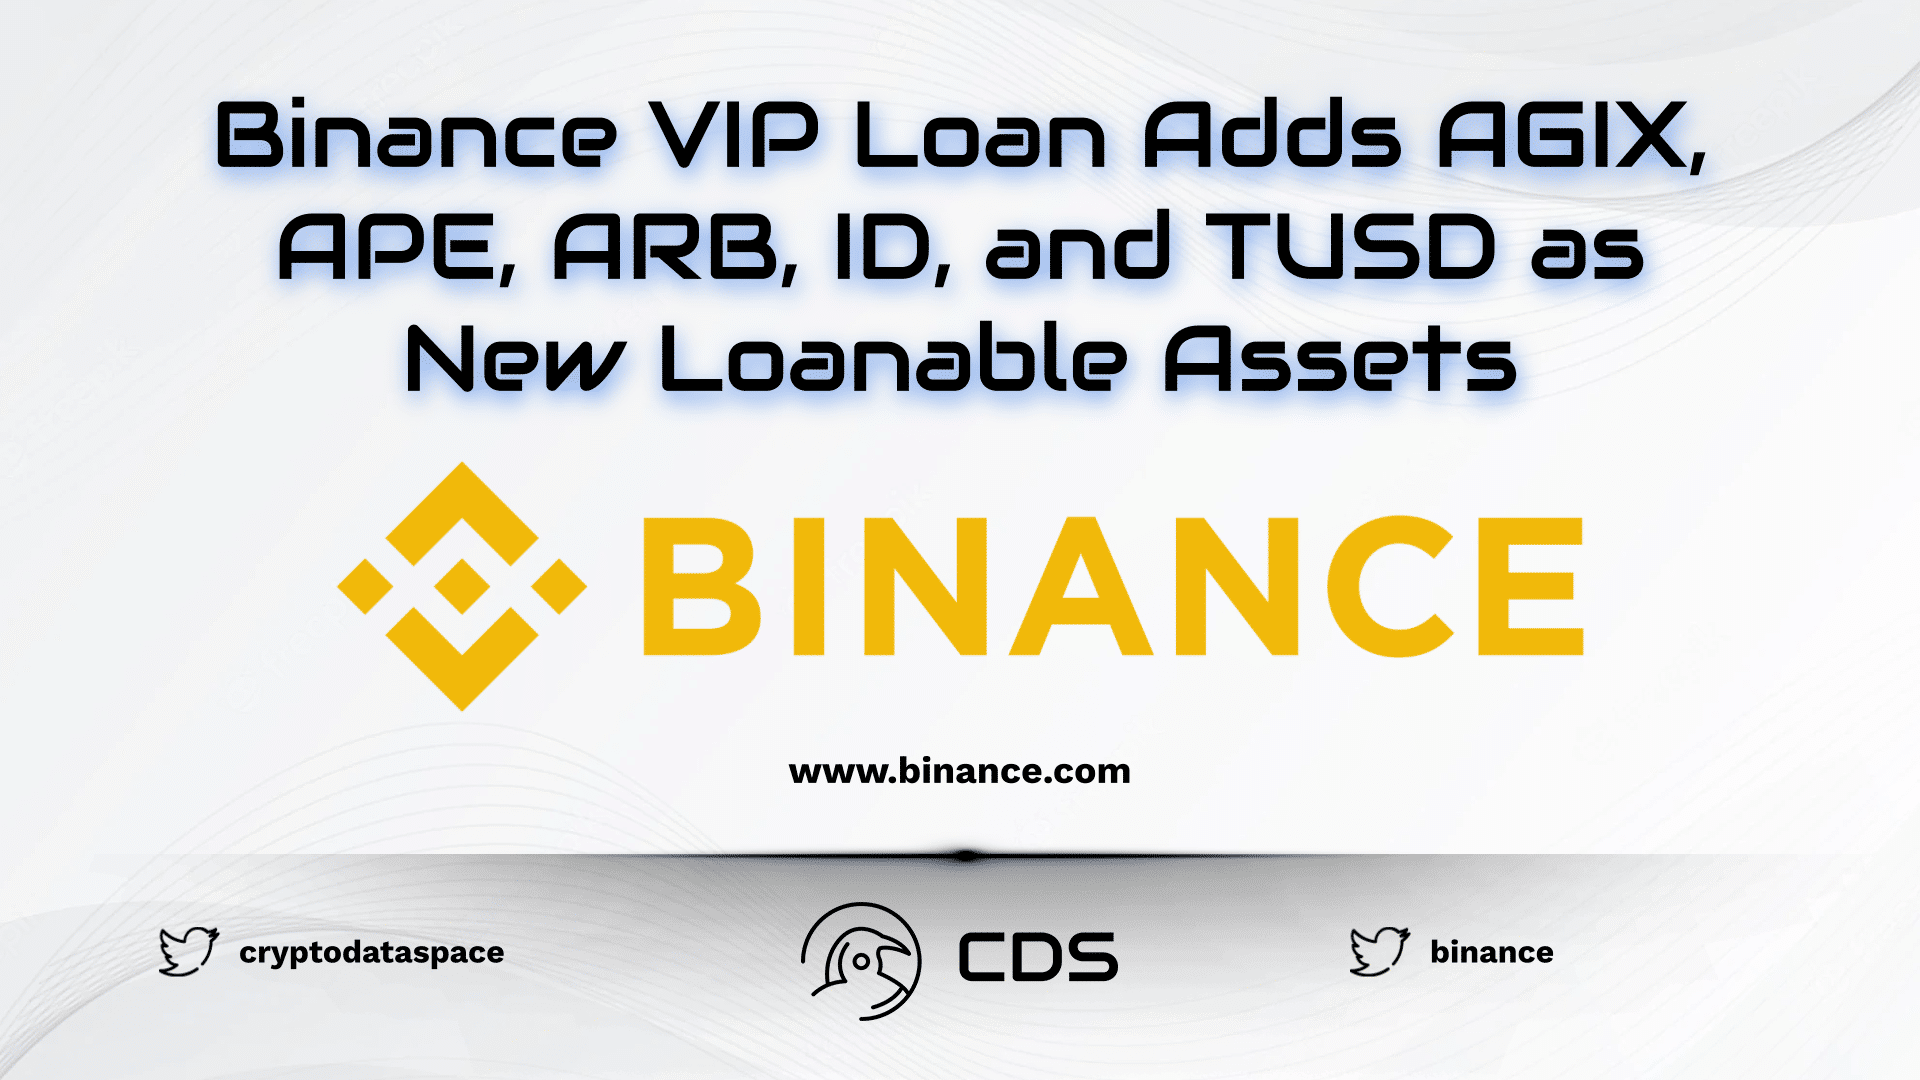 Binance VIP Loan Adds AGIX, APE, ARB, ID, and TUSD as New Loanable Assets - 2023.03.24